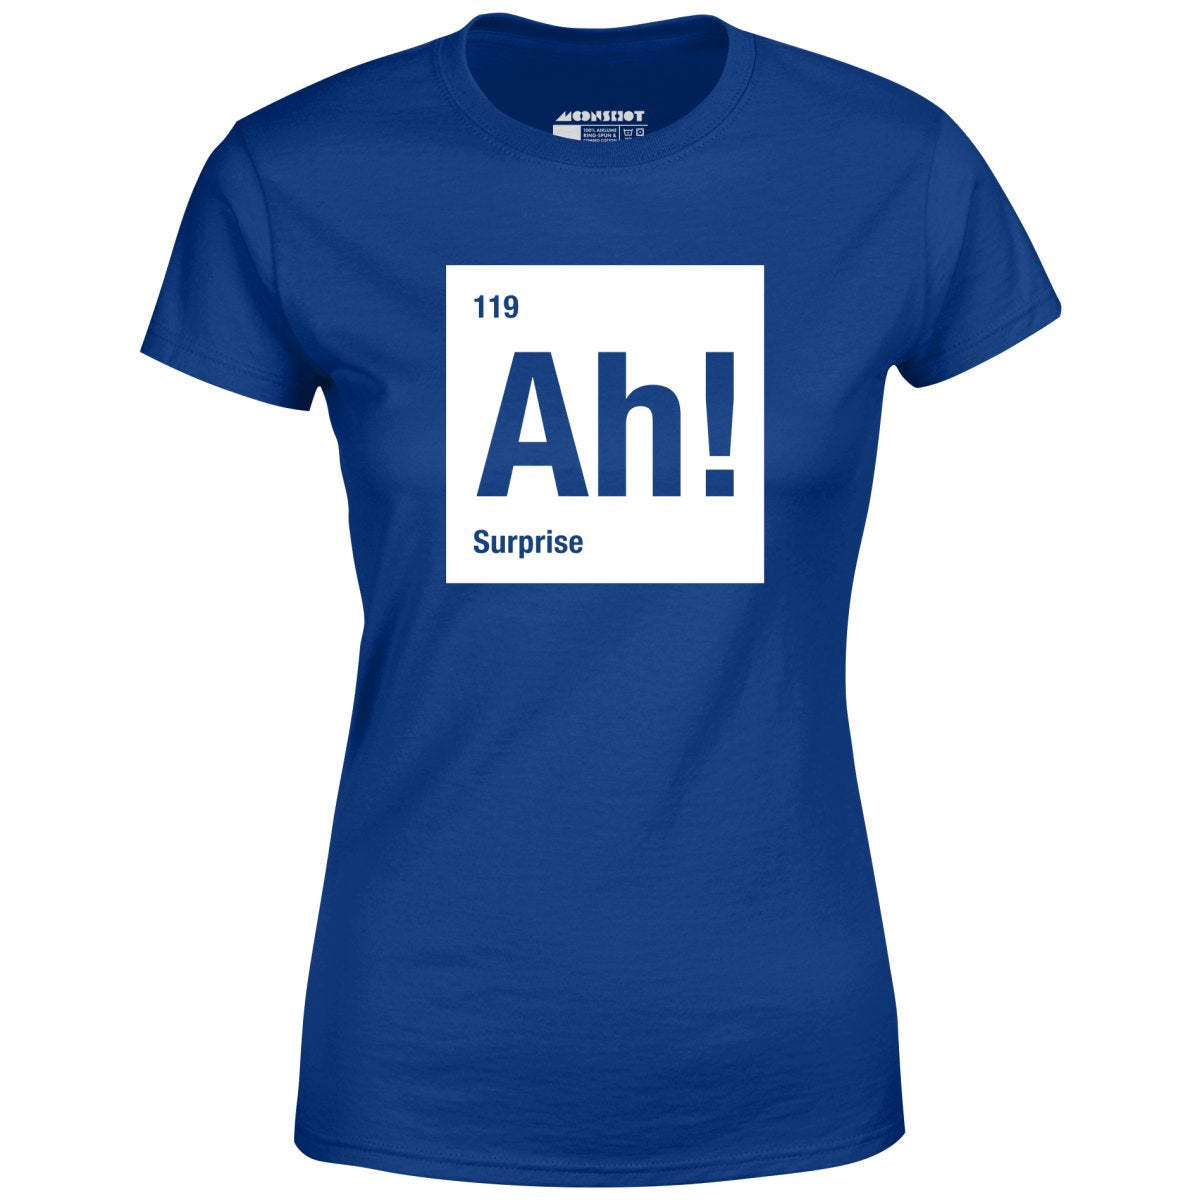 Ah! The Element of Surprise - Women's T-Shirt